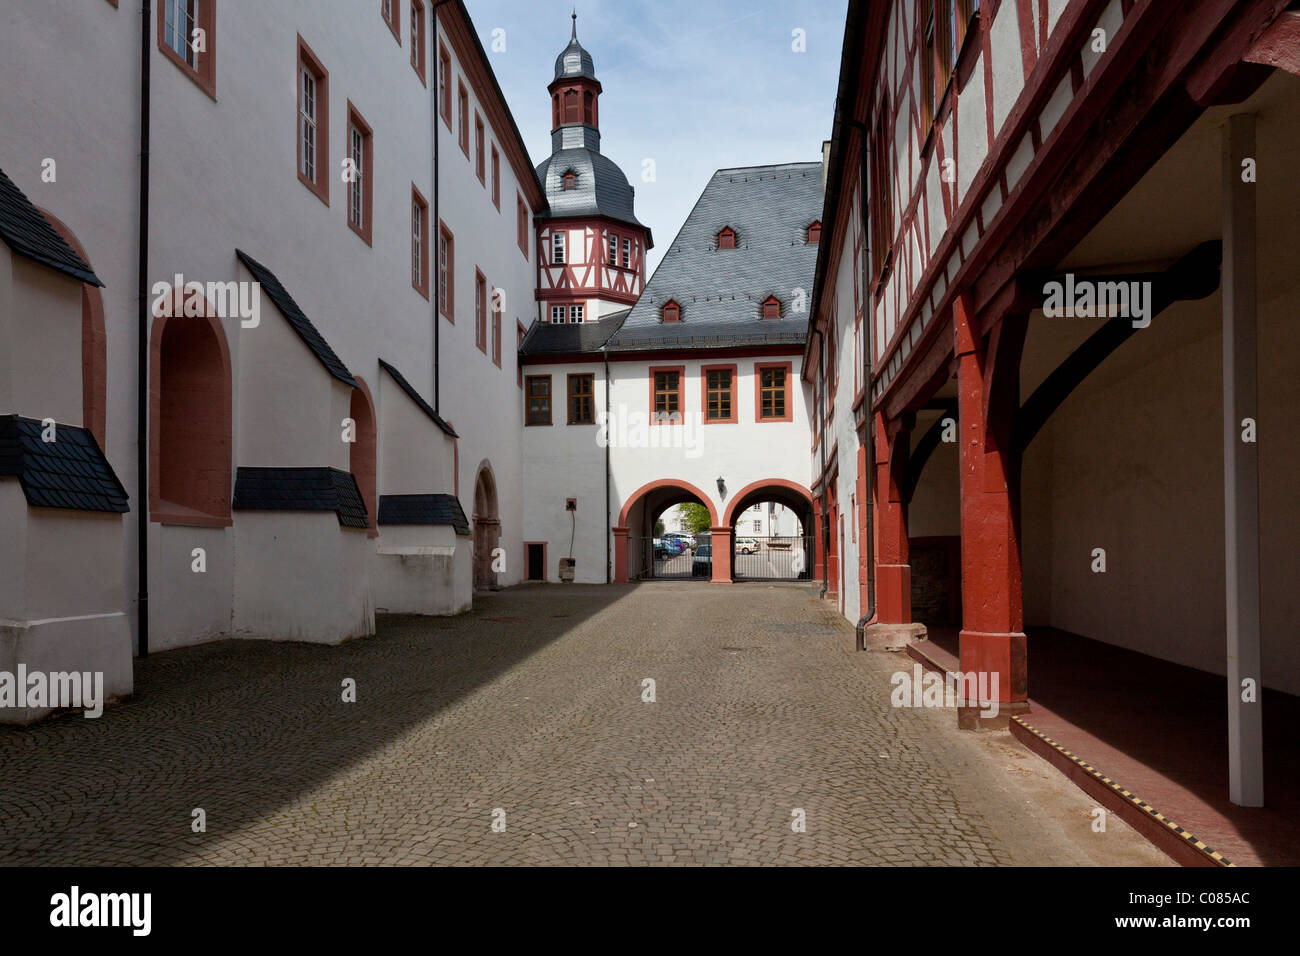 Kloster Eberbach Abbaye, Eltville am Rhein, Rheingau, Hesse, Germany, Europe Banque D'Images